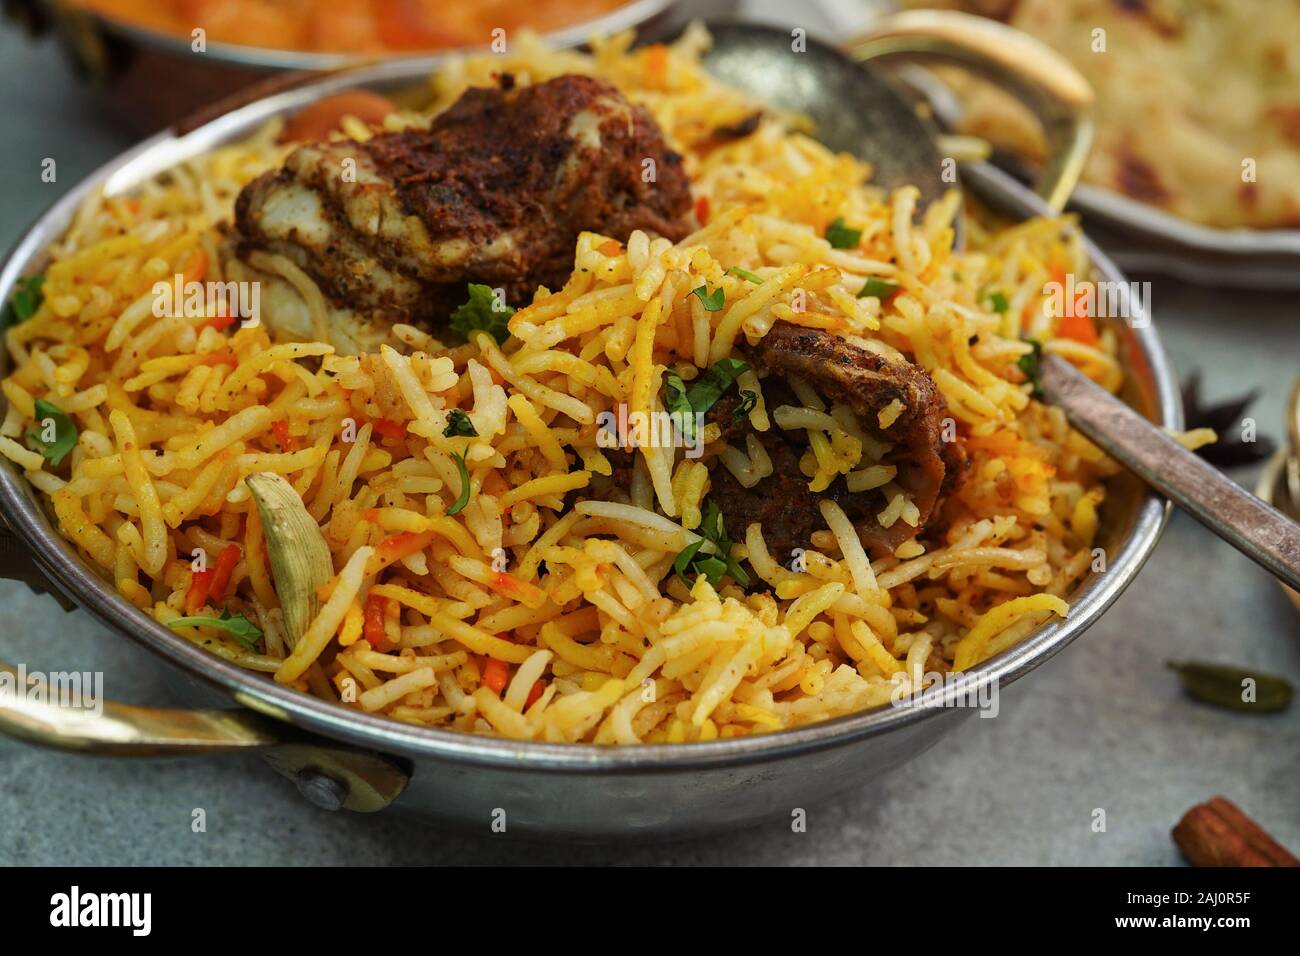 Schaf/Ziege Biryani - indische Mahlzeit Konzept, selektiven Fokus Stockfoto